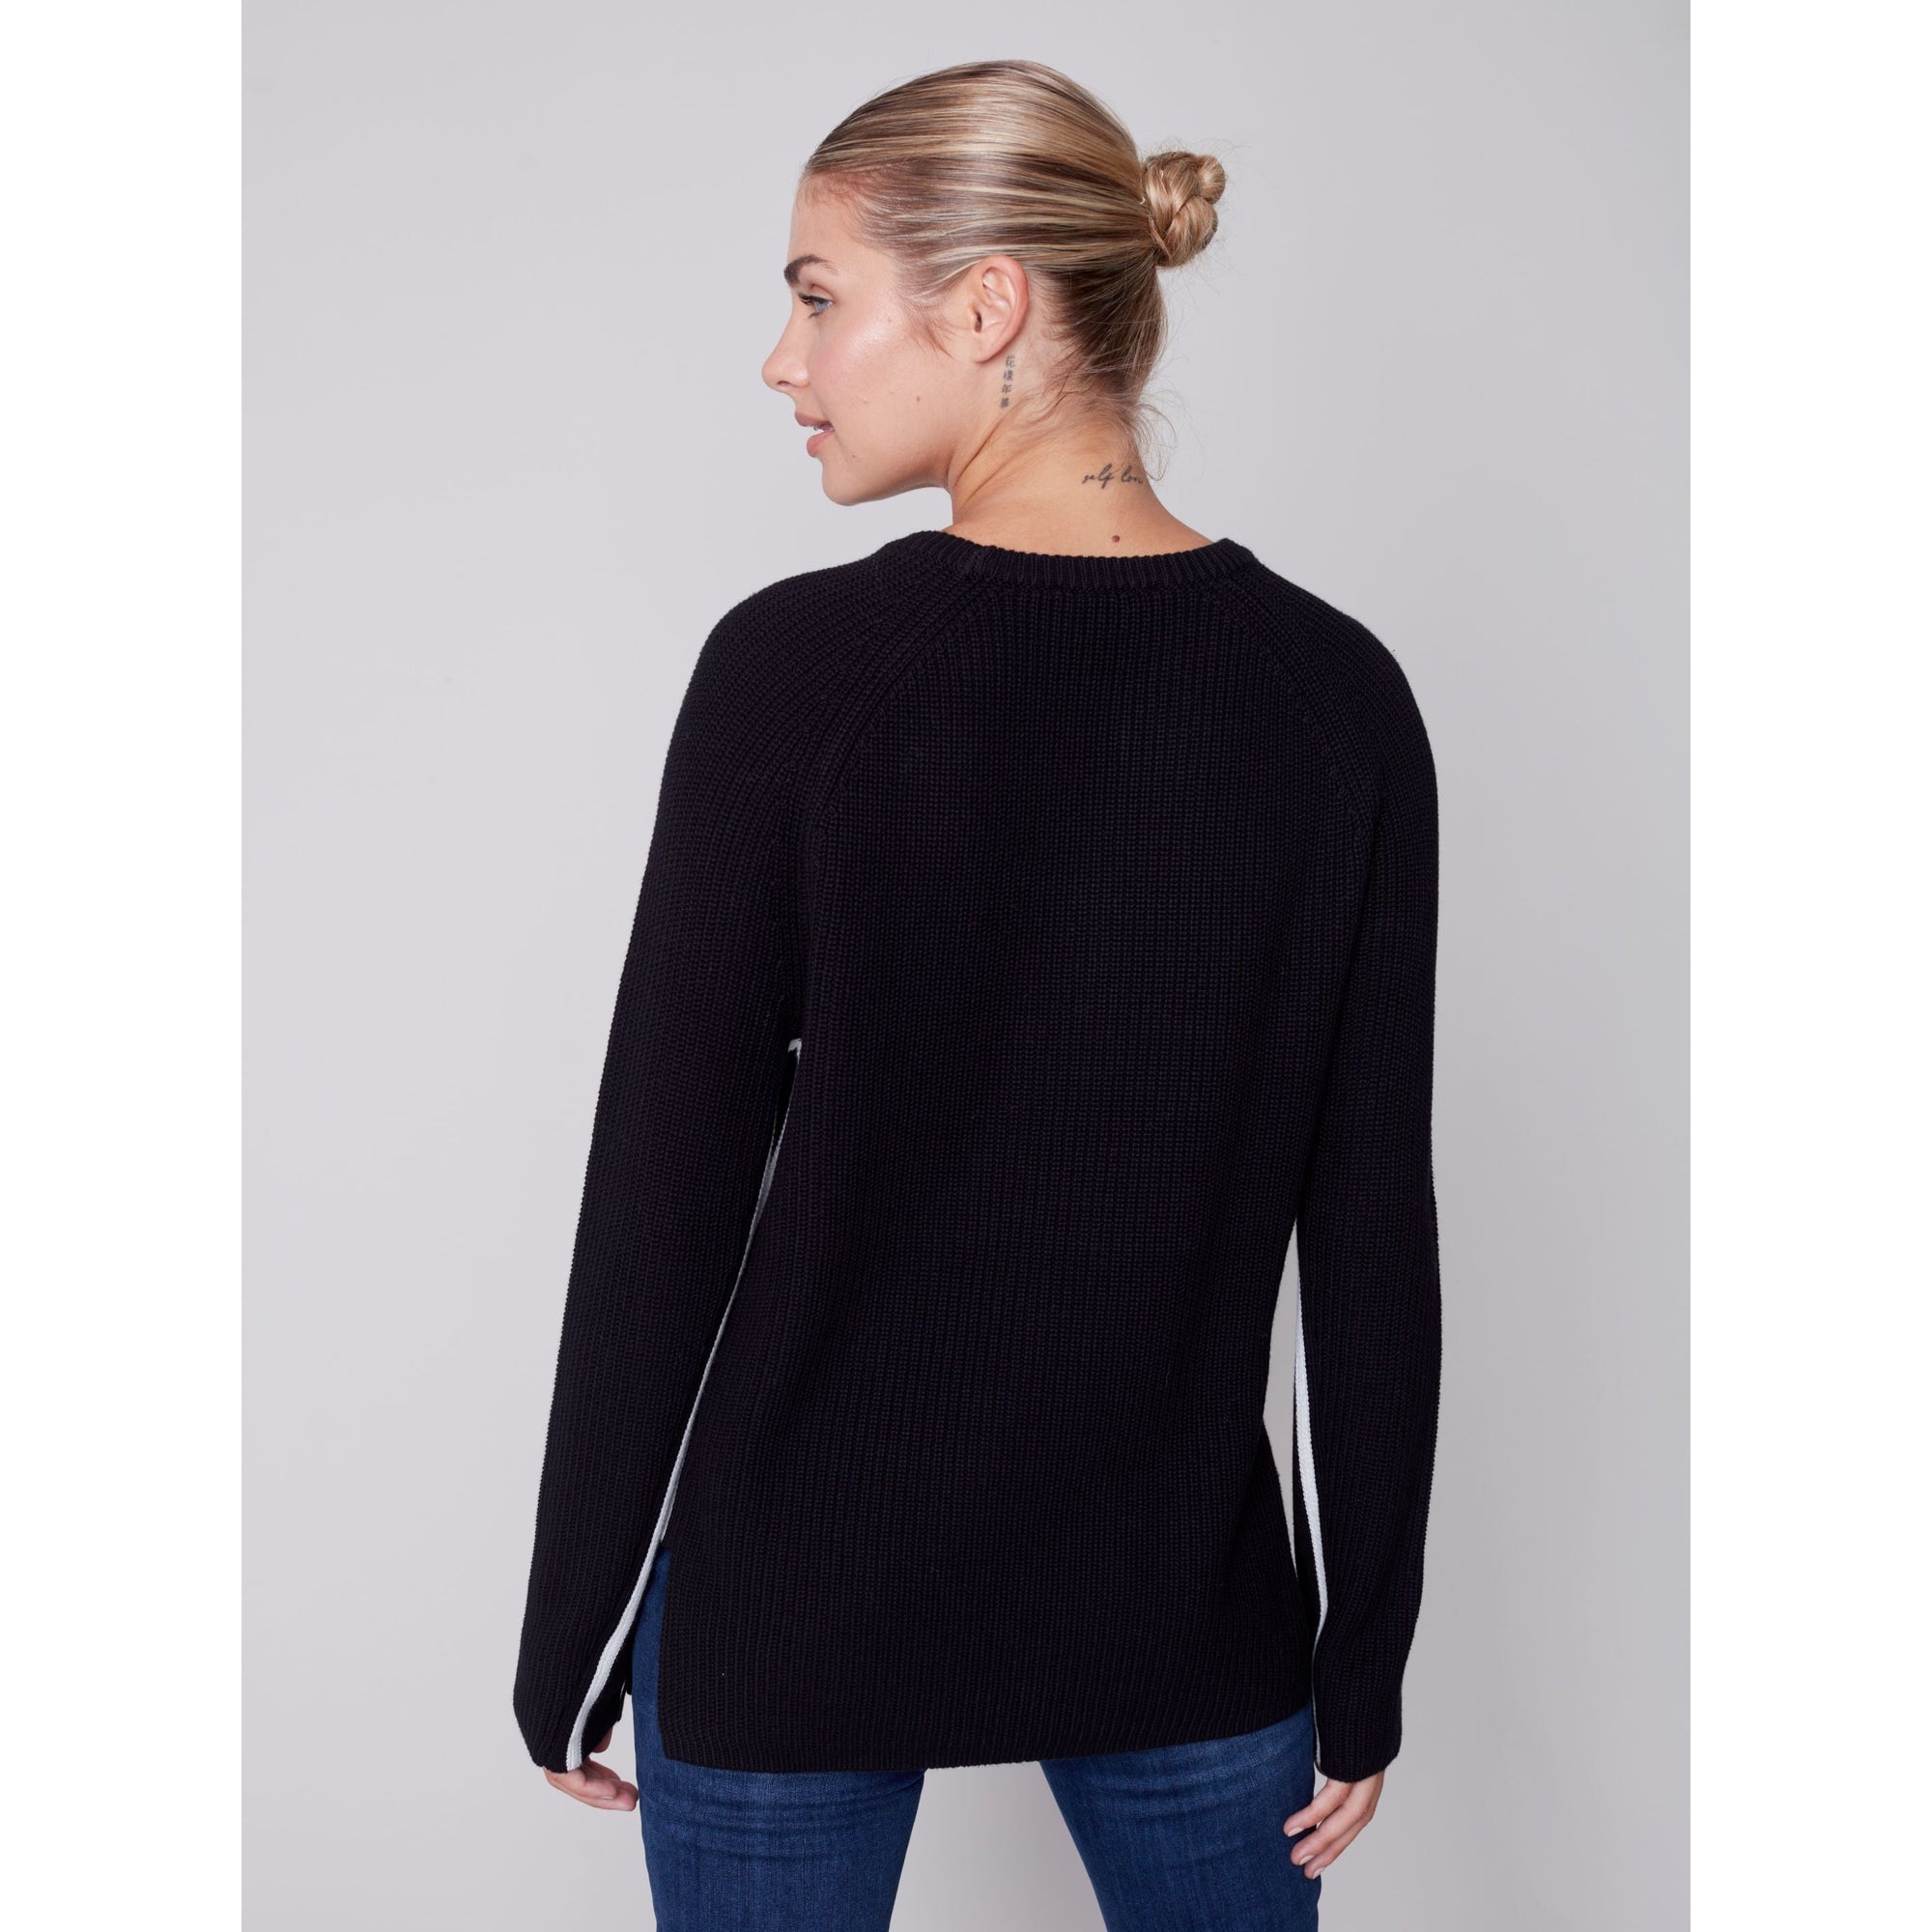 CONTRAST SIDE ZIP SWEATER-Jackets & Sweaters-CHARLIE B-XSMALL-Black-Coriander